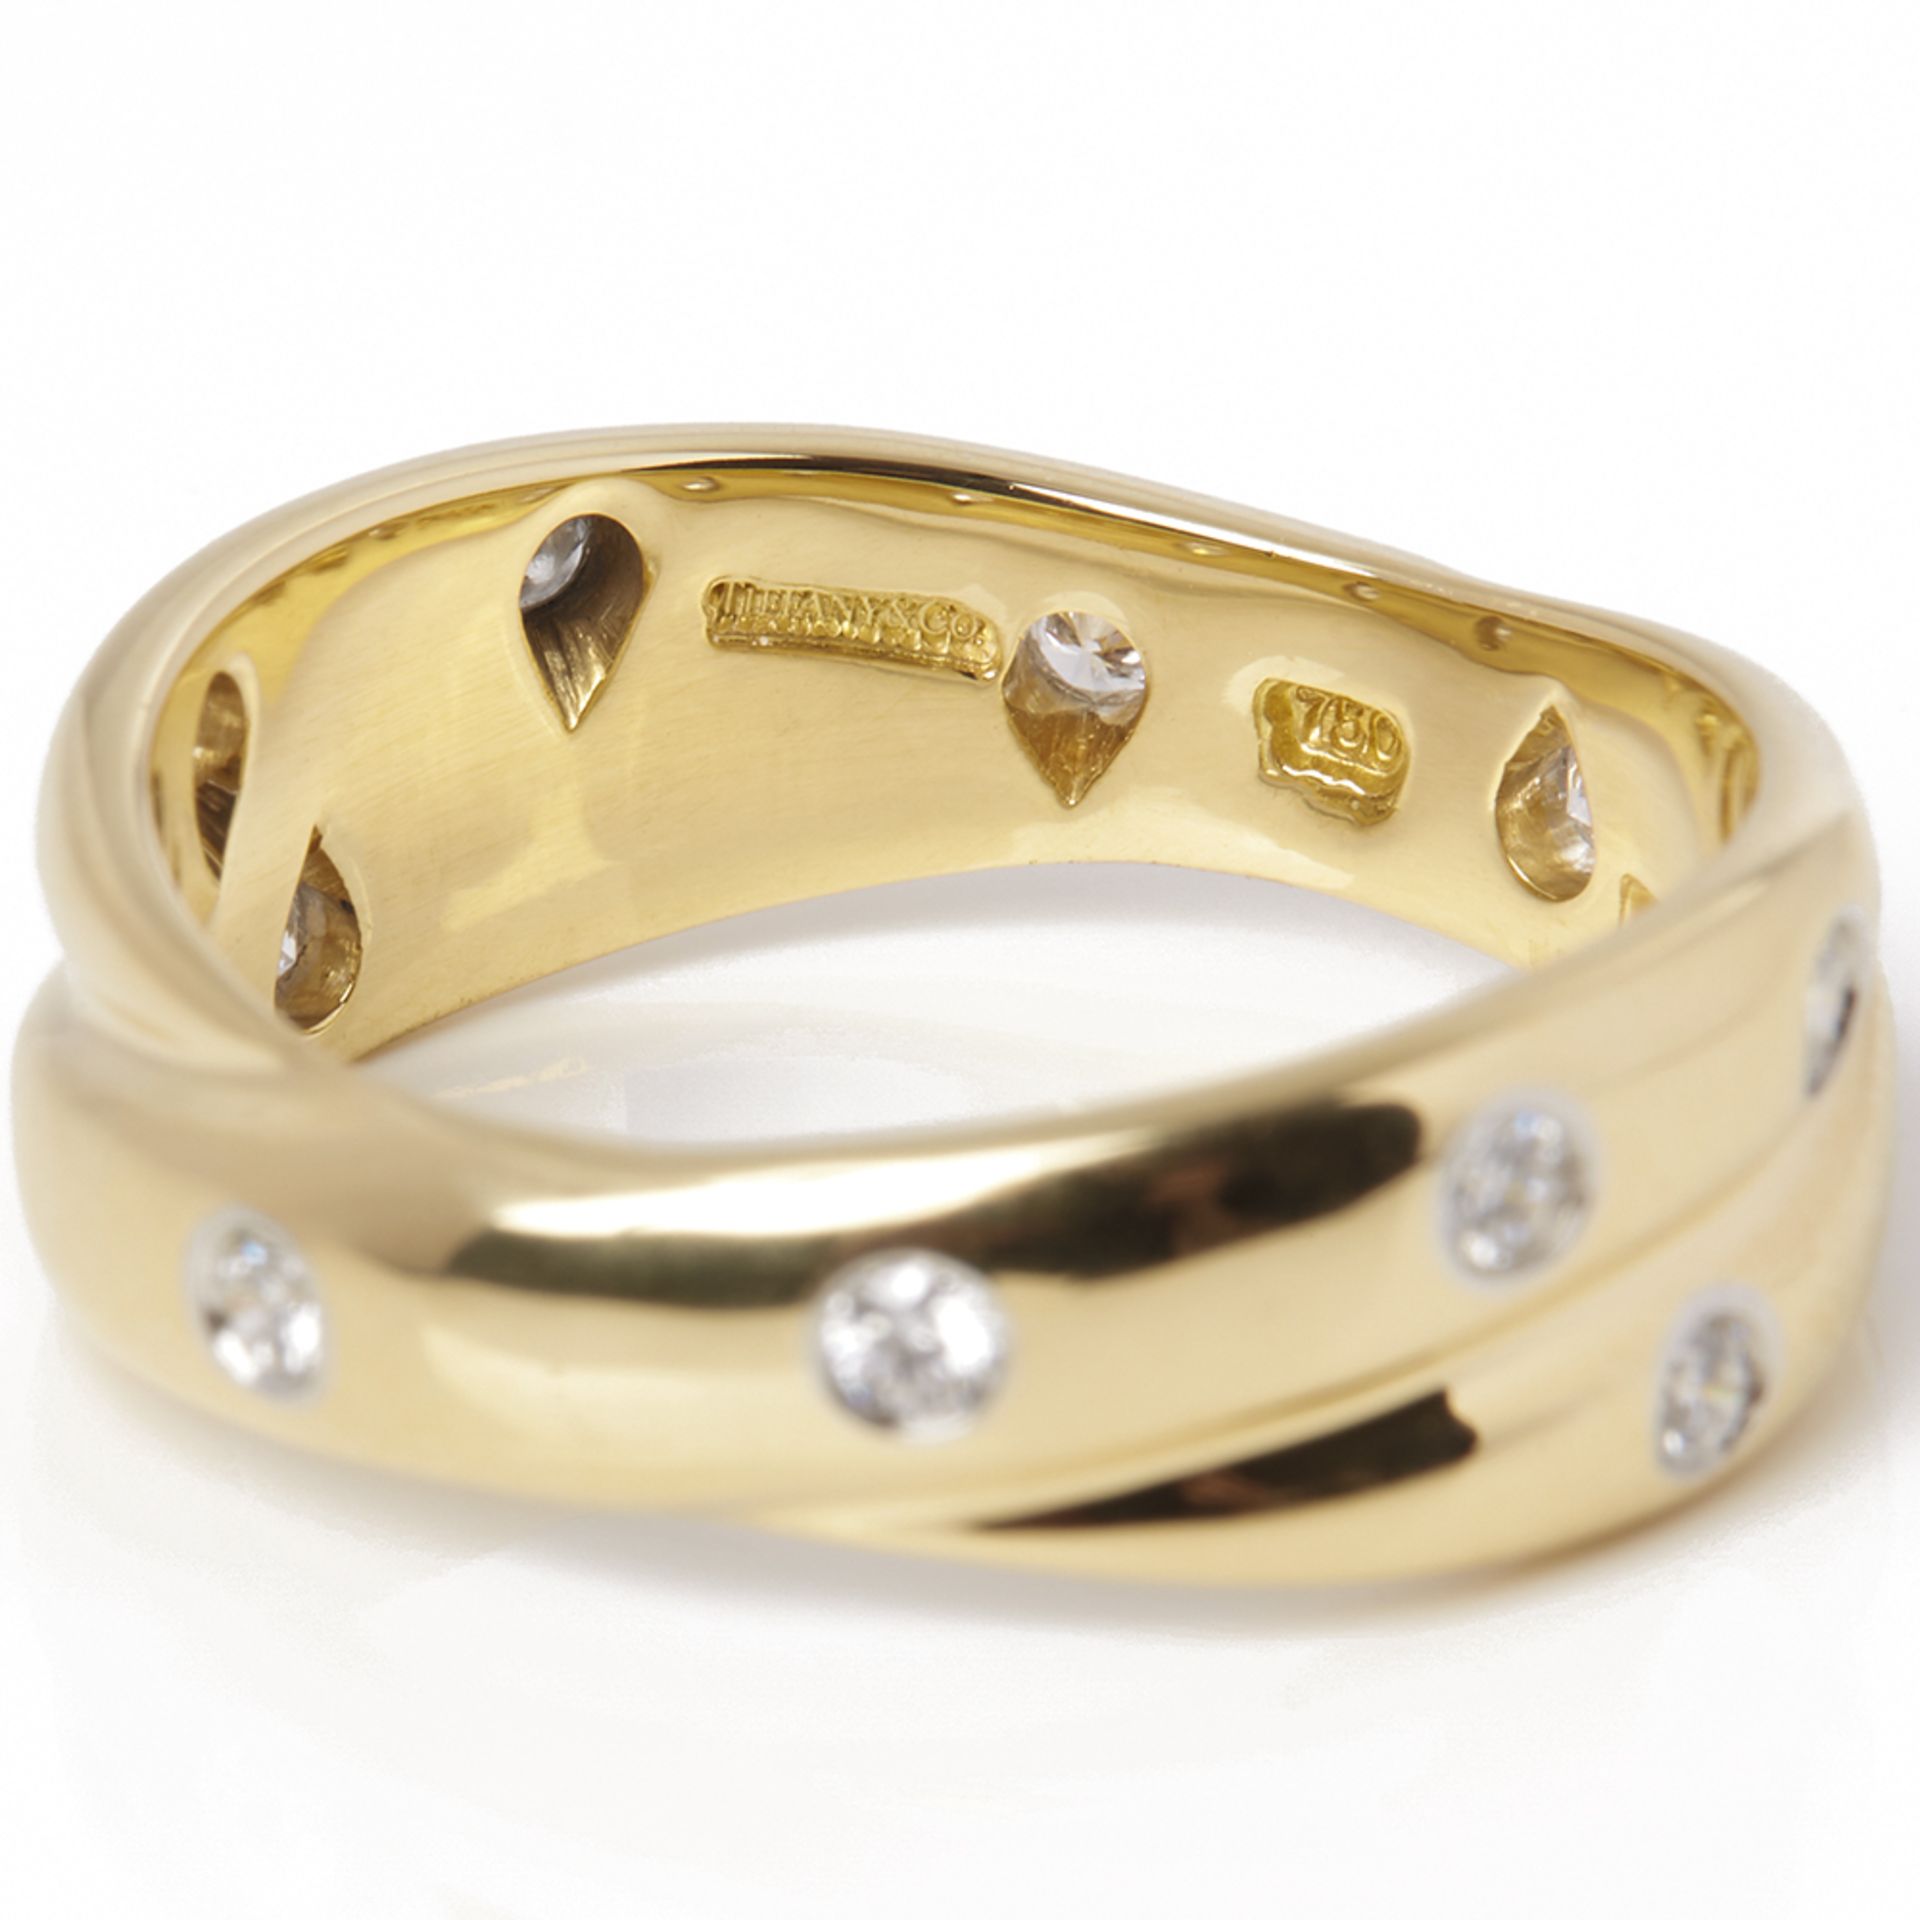 Tiffany & Co. 18k Yellow Gold Diamond Etoile Ring - Image 5 of 6